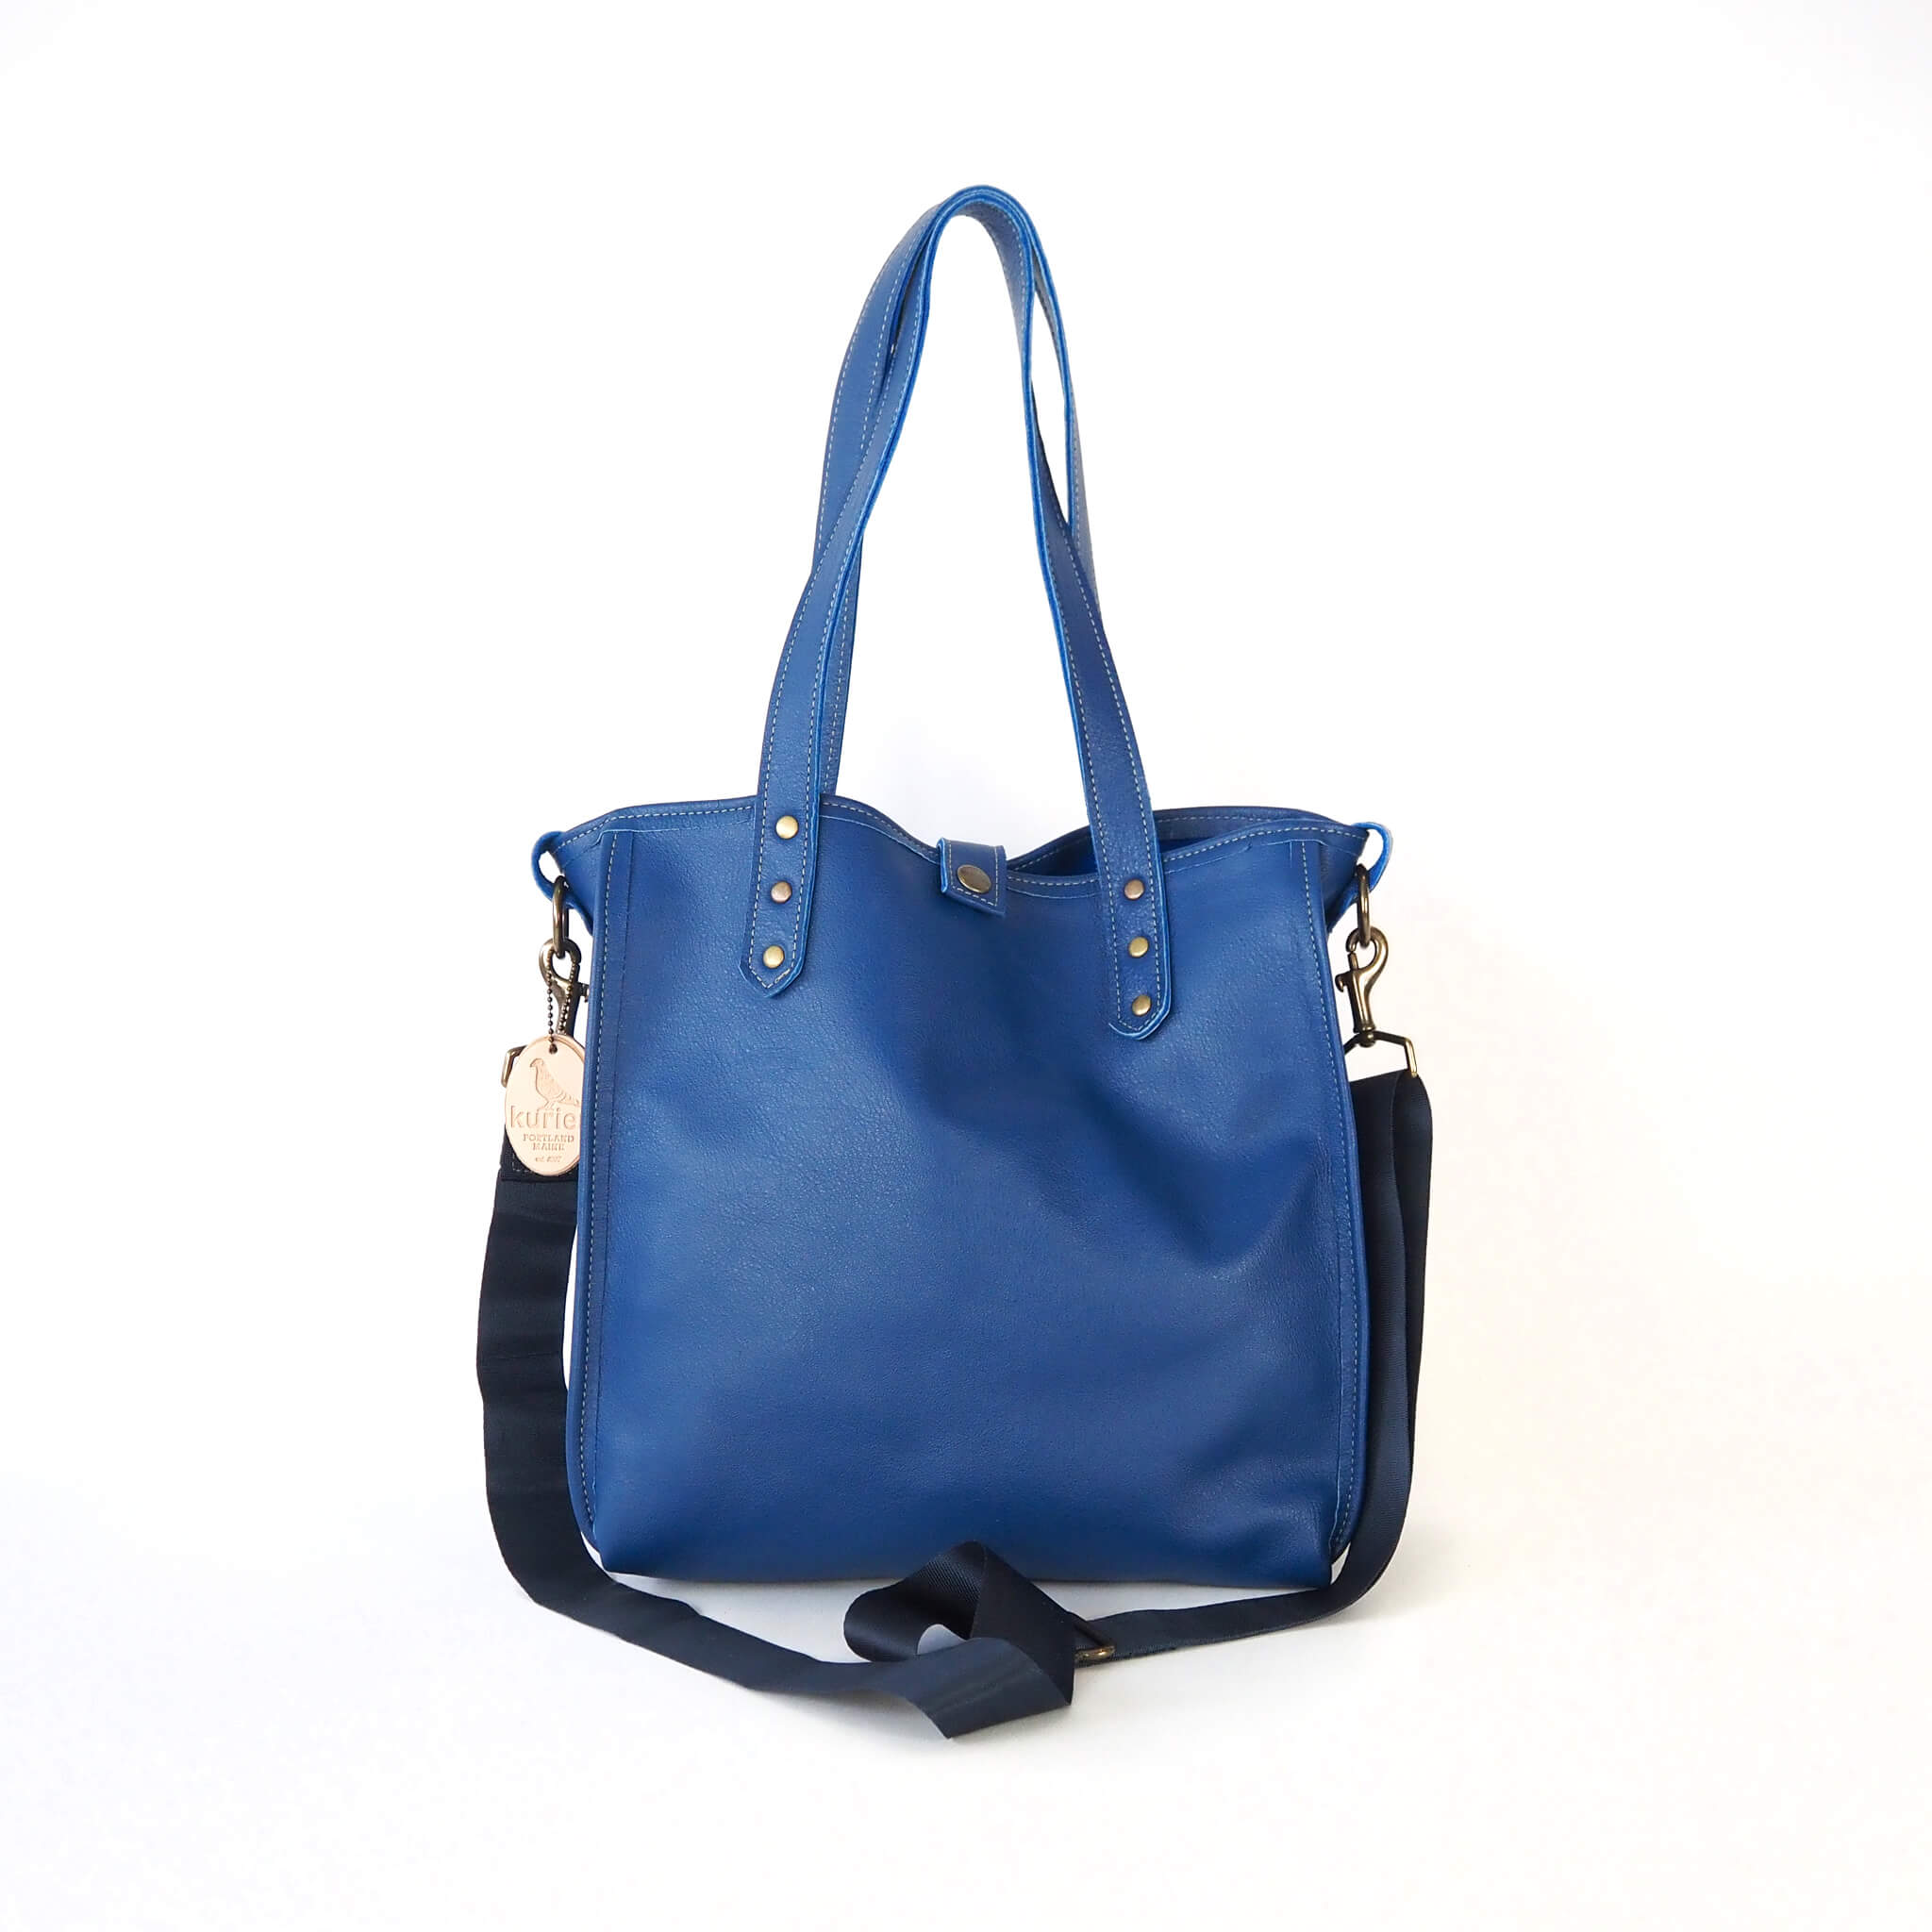 charlotte tote - crossbody, adjustable, travel bag - handmade leather - indigo front view